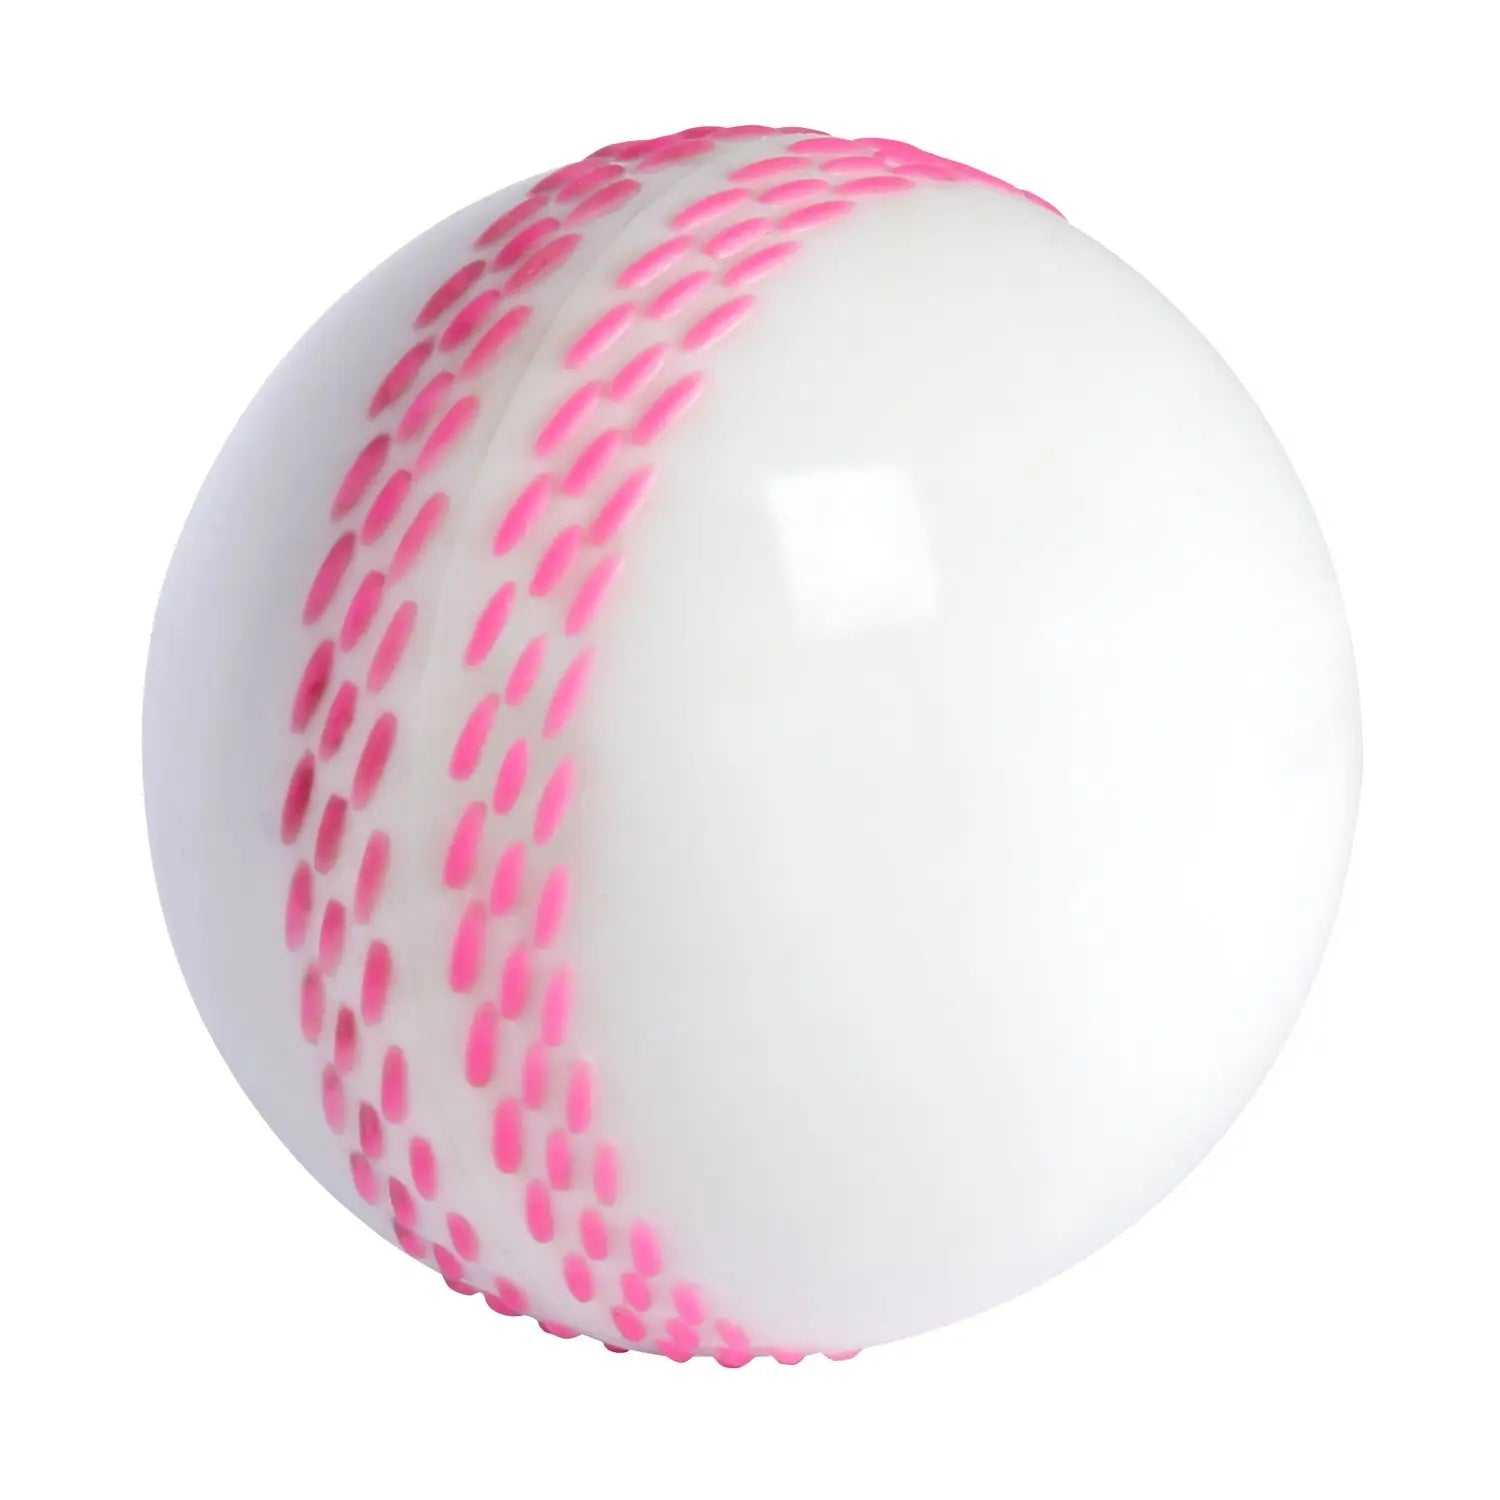 Velocity Cricket Ball Superb Training Device Soft Rubber Ball Gray Nicolls - White - BALL - TRAINING SENIOR